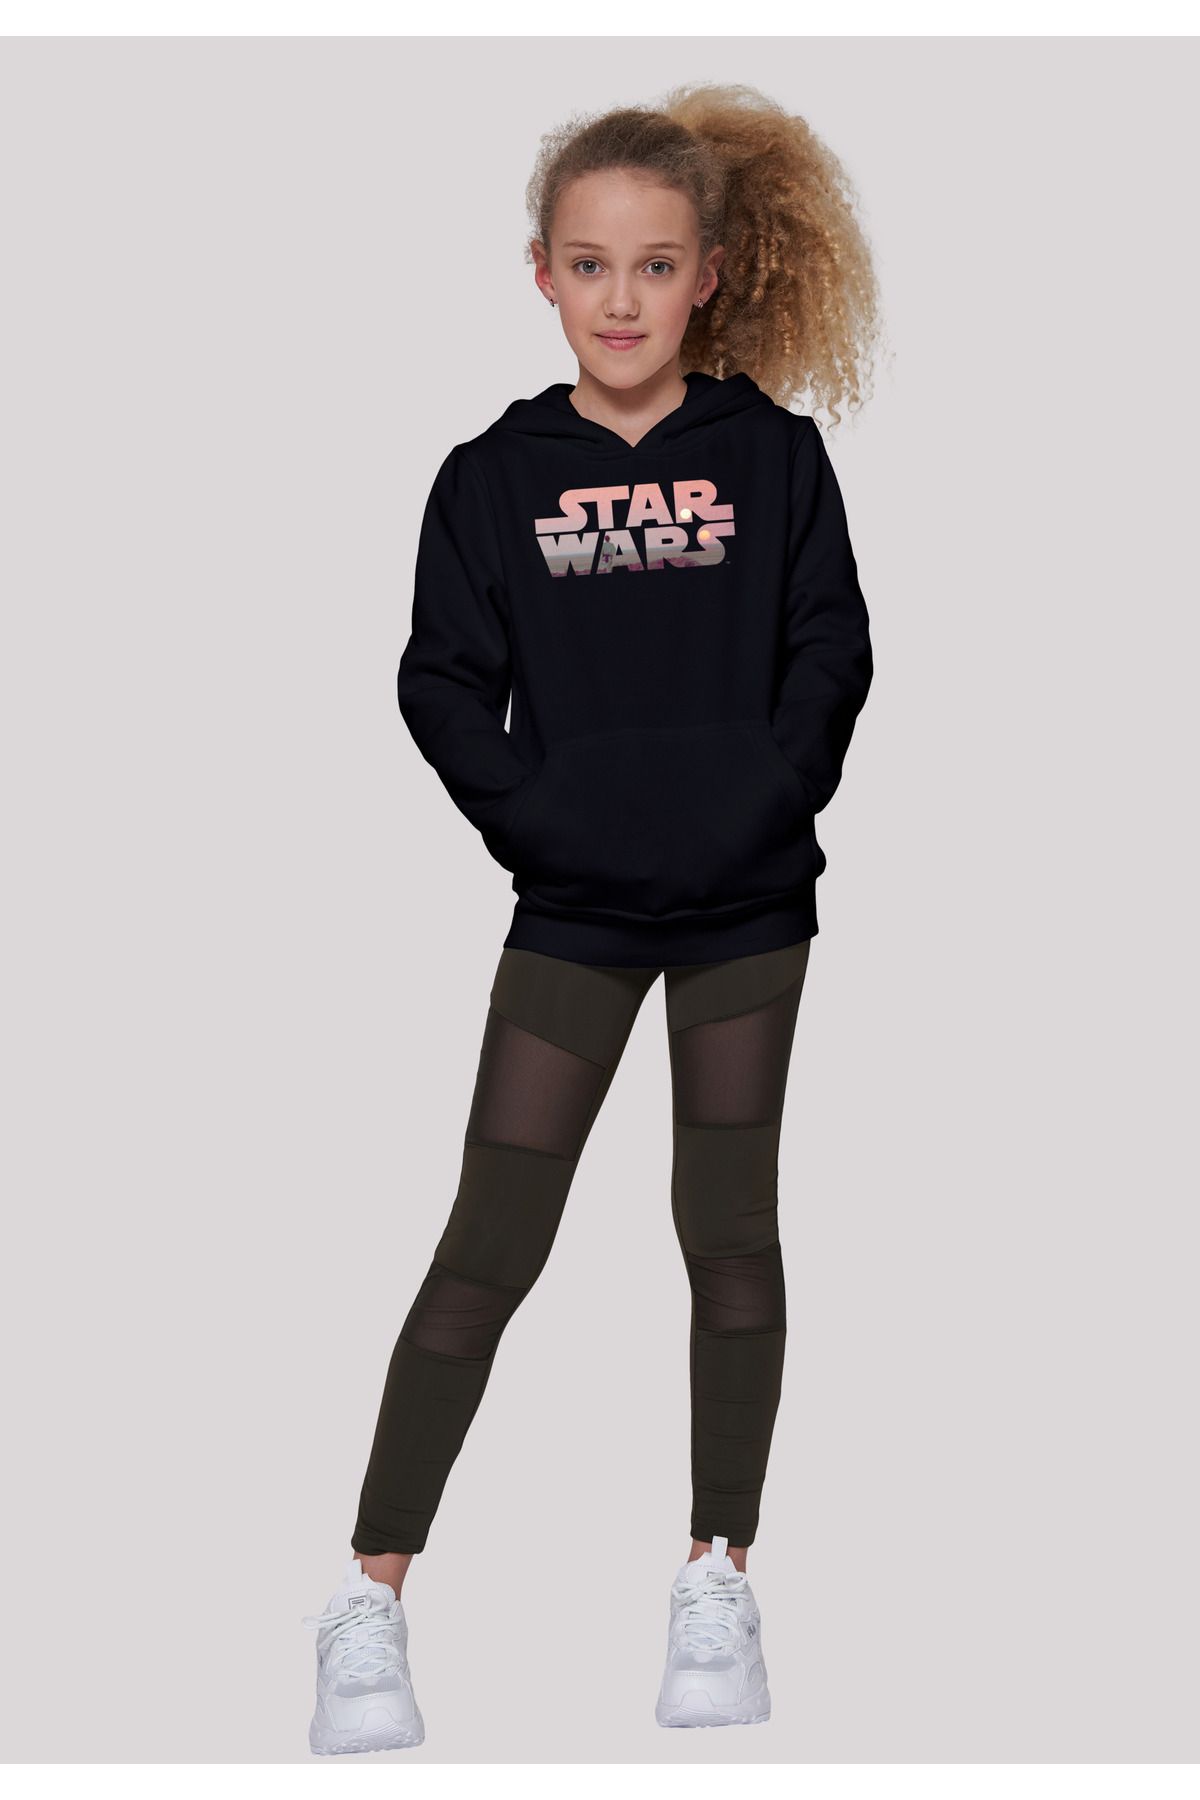 Tatooine Wars Trendyol Logo Kinder - Kids Basic F4NT4STIC Star Hoody mit